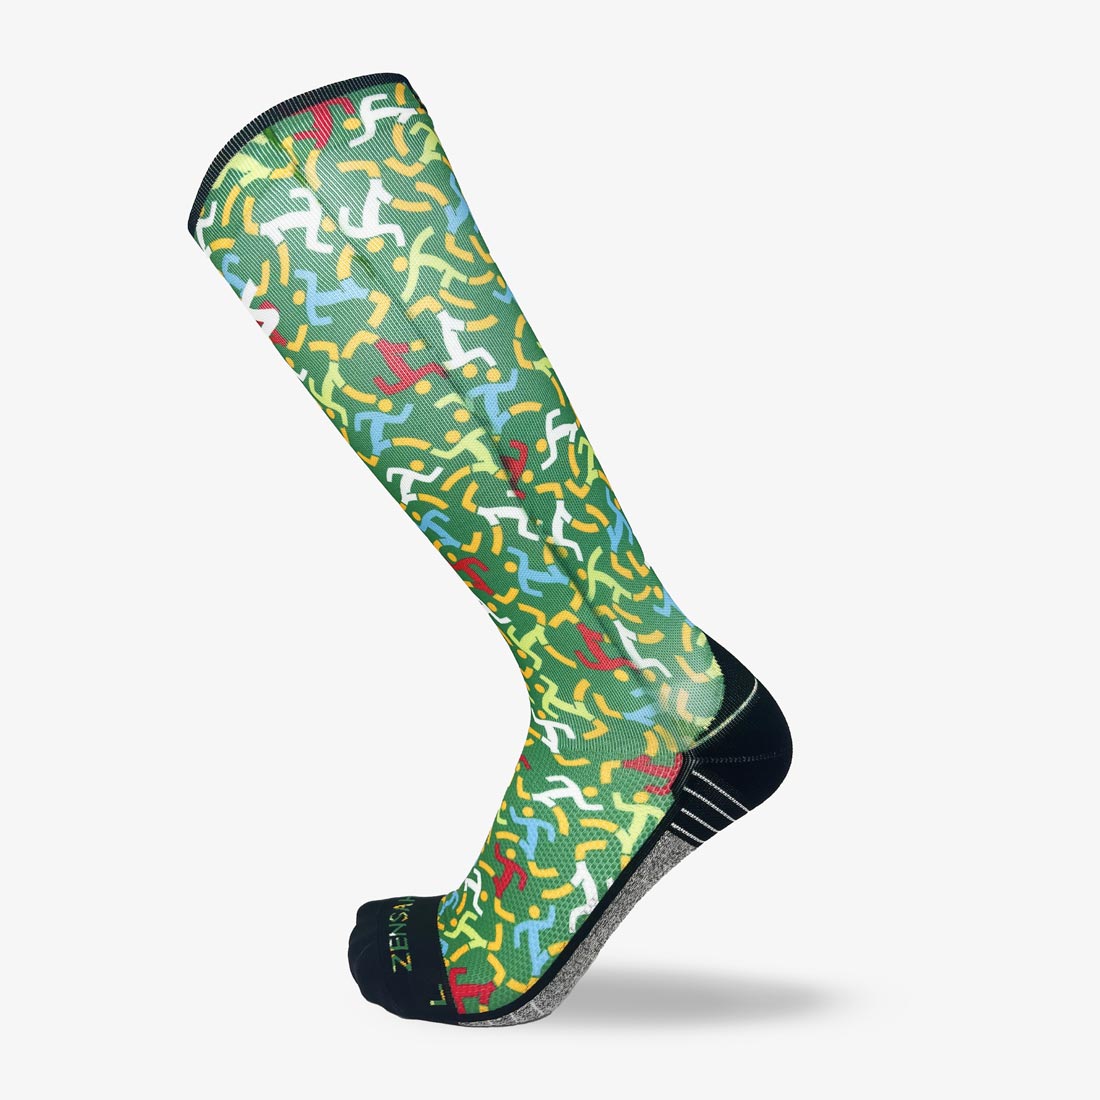 Running People Compression Socks (Knee-High)Socks - Zensah